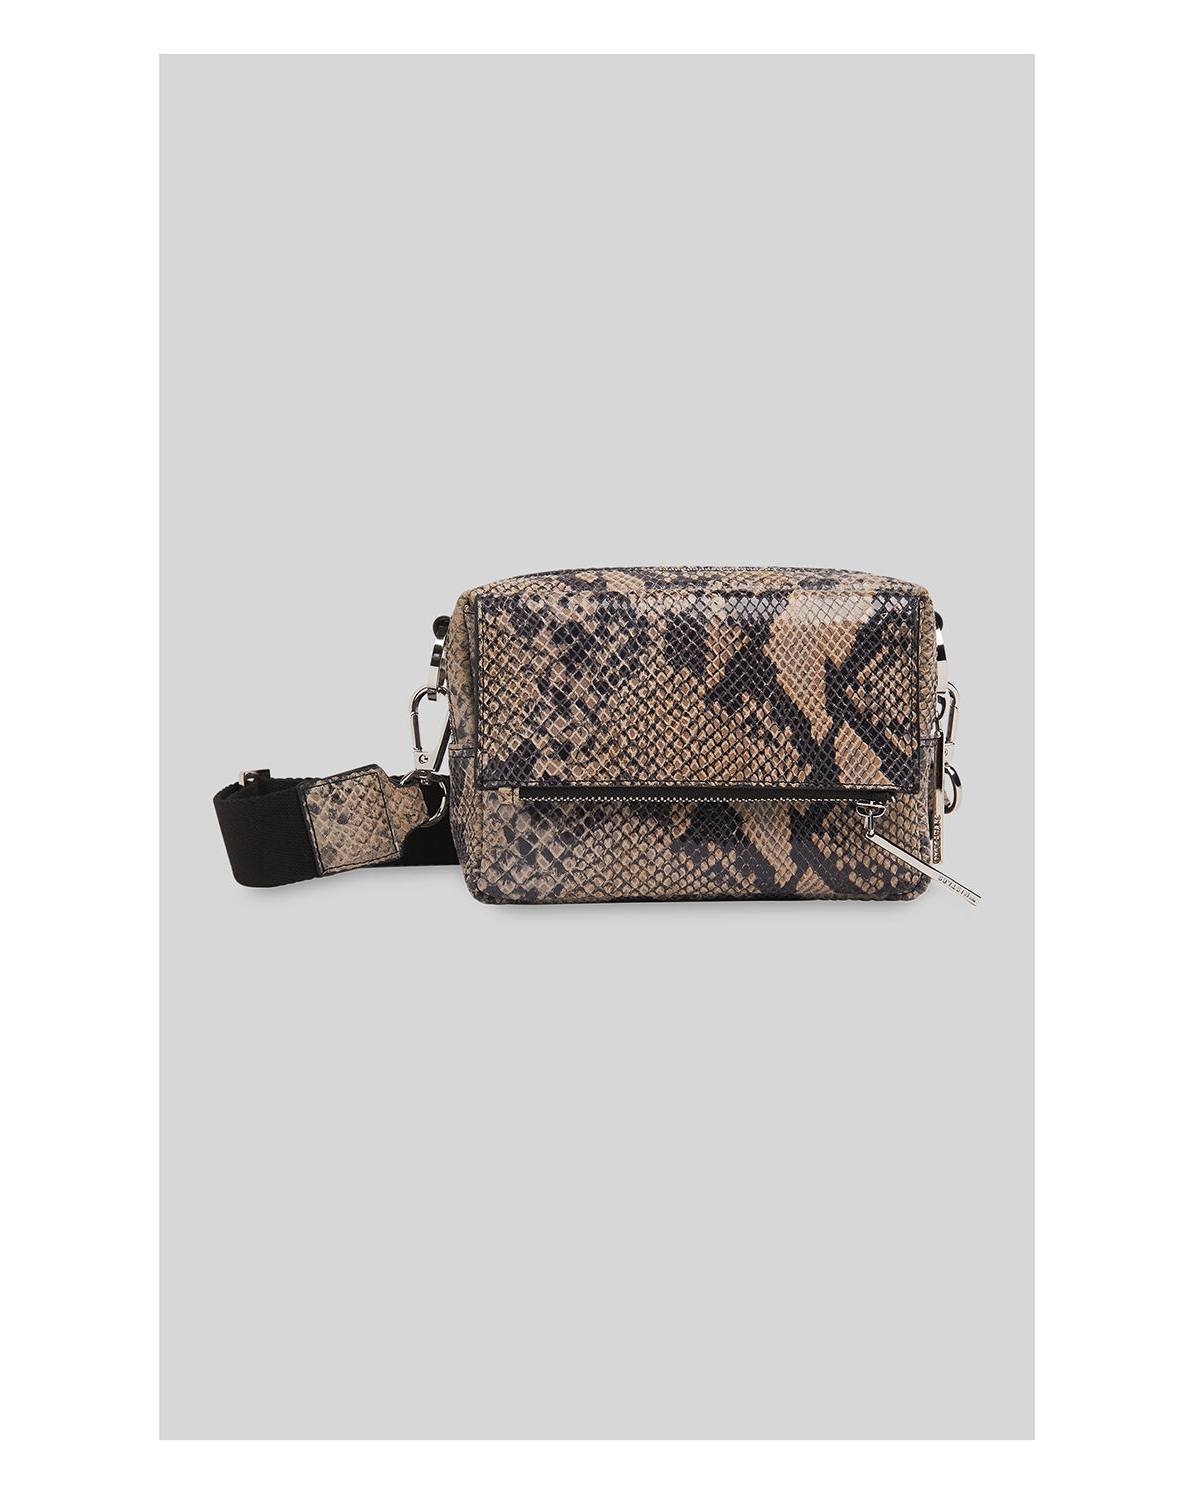 Bibi Leopard Print Leather Crossbody Bag, Whistles